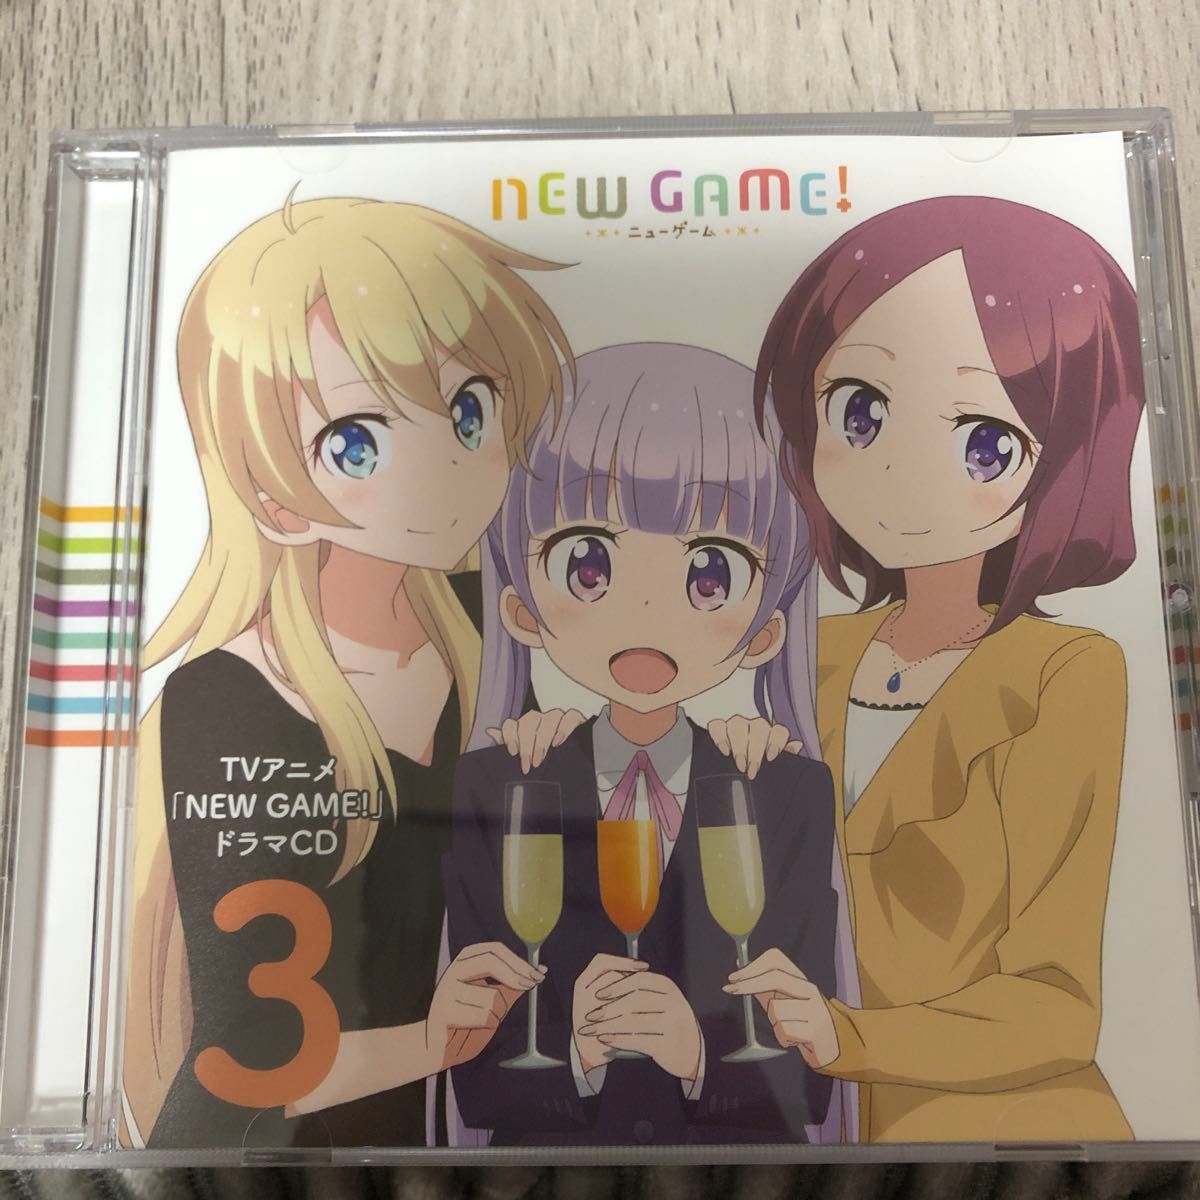 TVアニメ 「NEW GAME!」 ドラマCD 3 CD (ドラマCD) 高田憂希、日笠陽子、茅野愛衣、山口